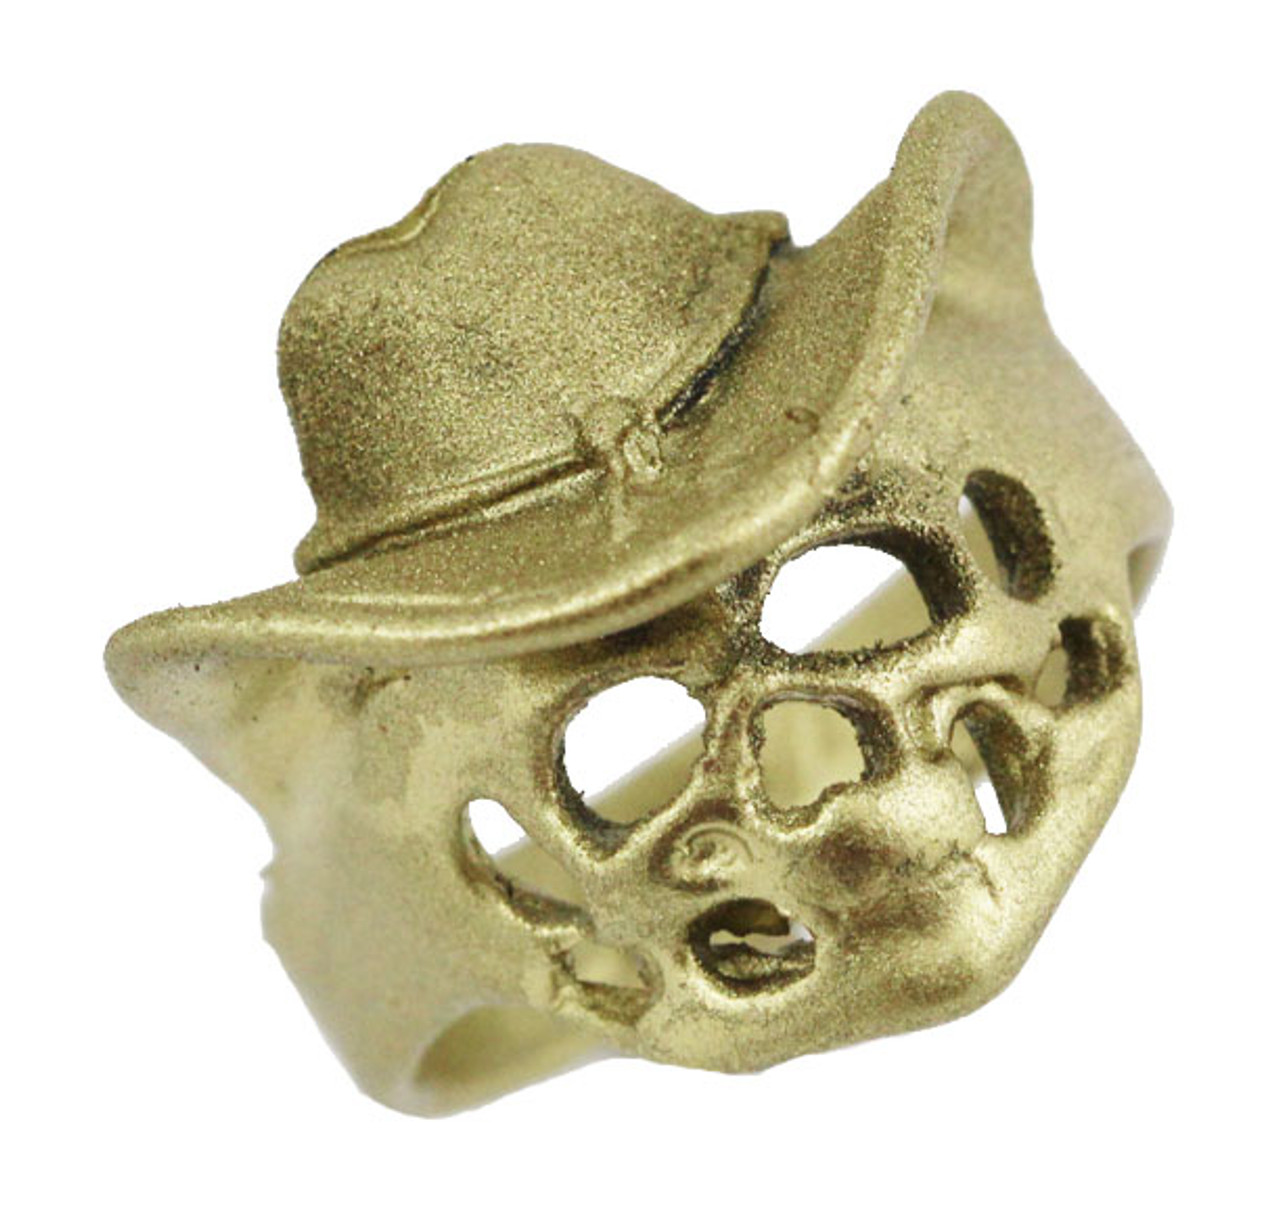 Skull in Cowboy Hat